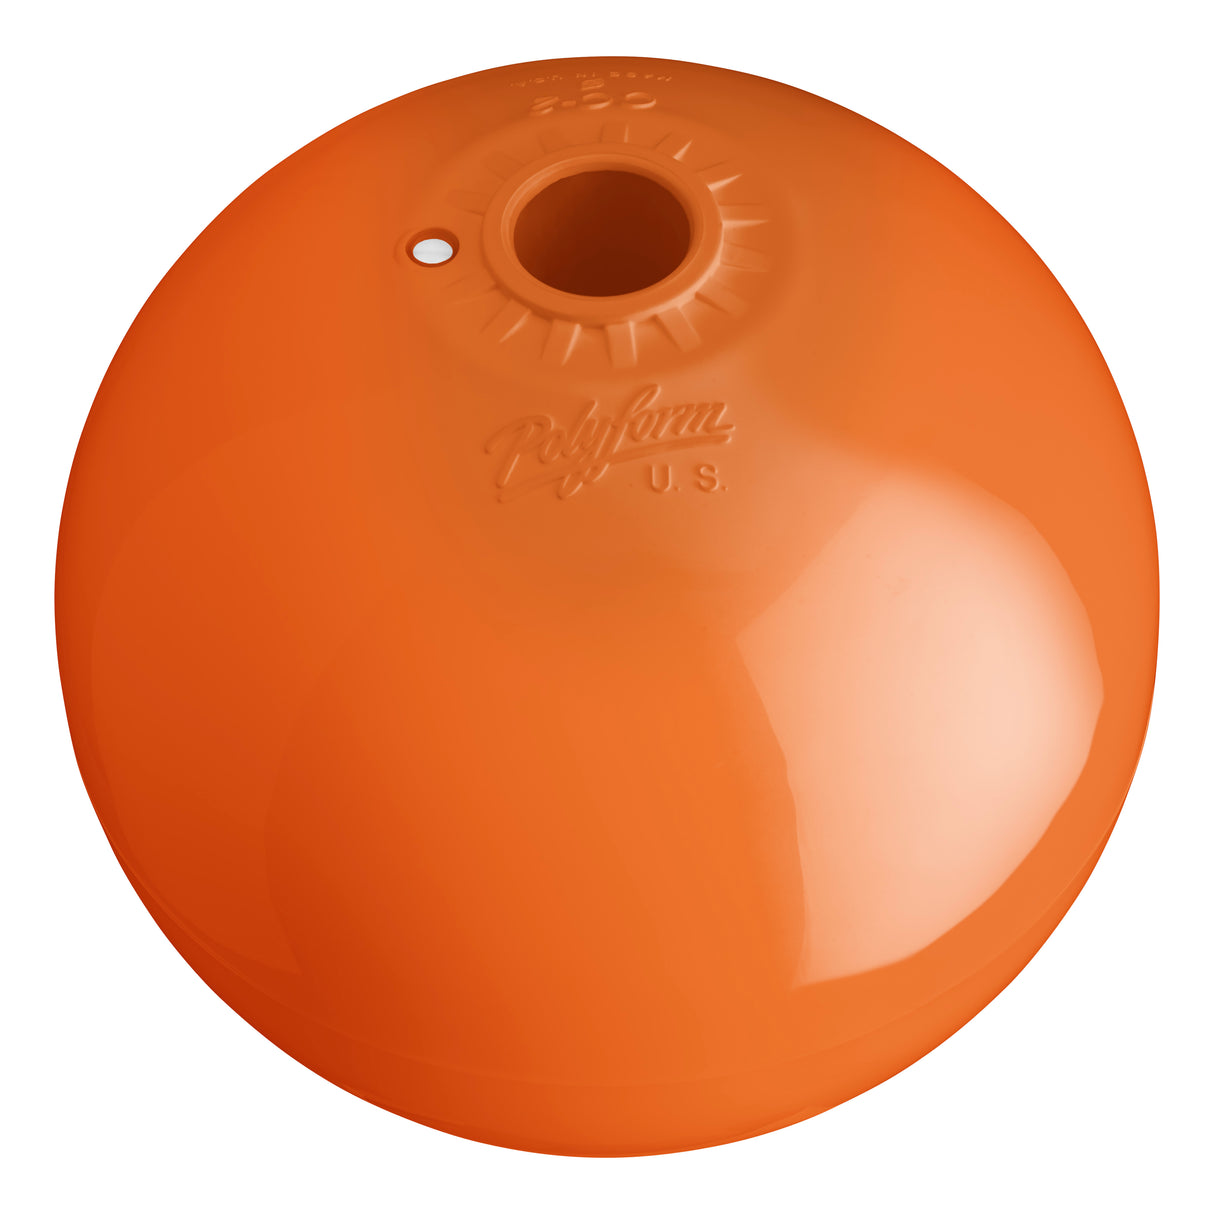 Hole through center mooring and marker buoy, Polyform CC-1 International Orange angled shot